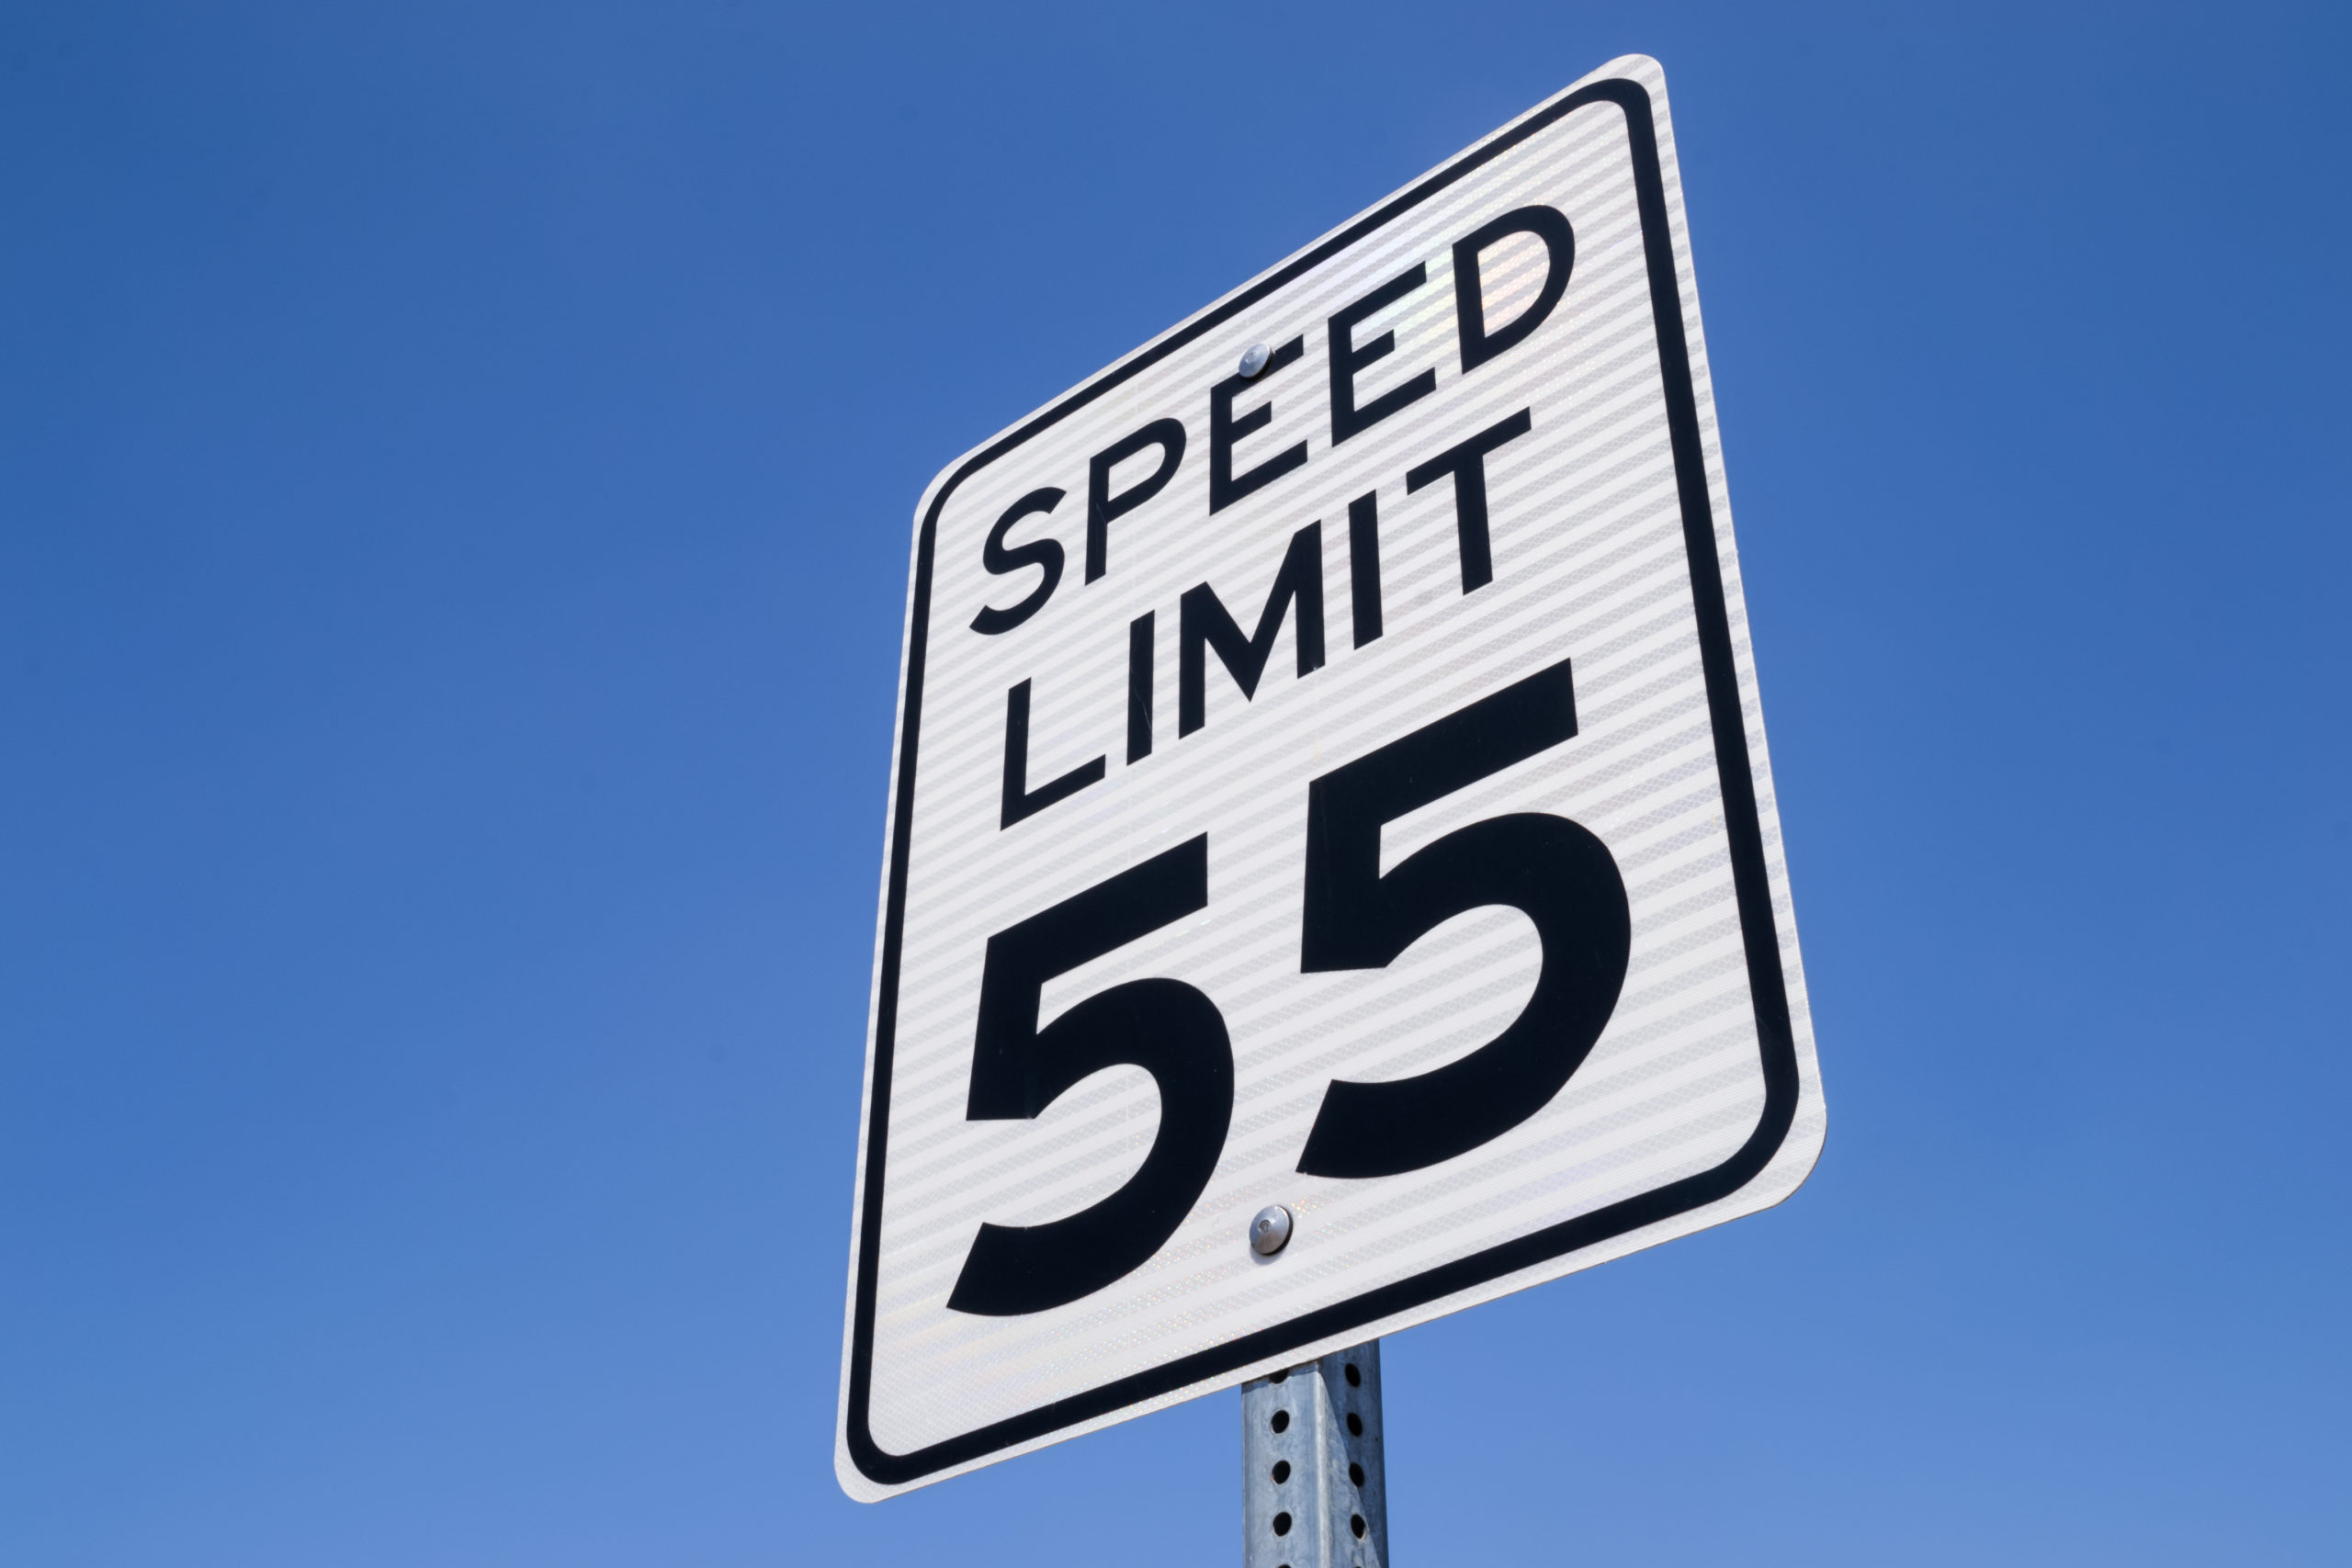 55 speed limit sign